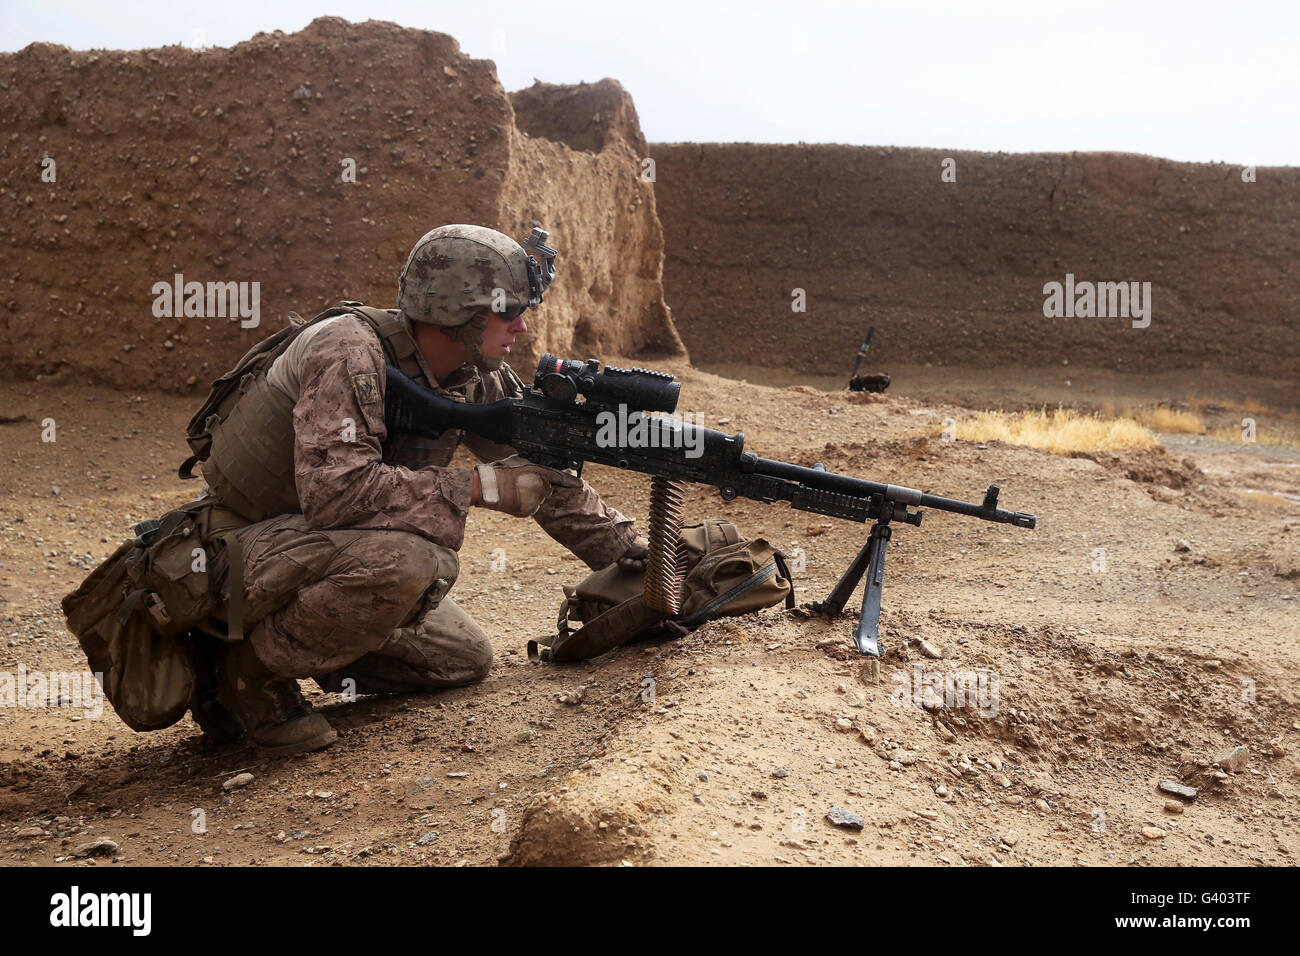 .S. Marine gunner provides security with an M240B medium machine gun. Stock Photo